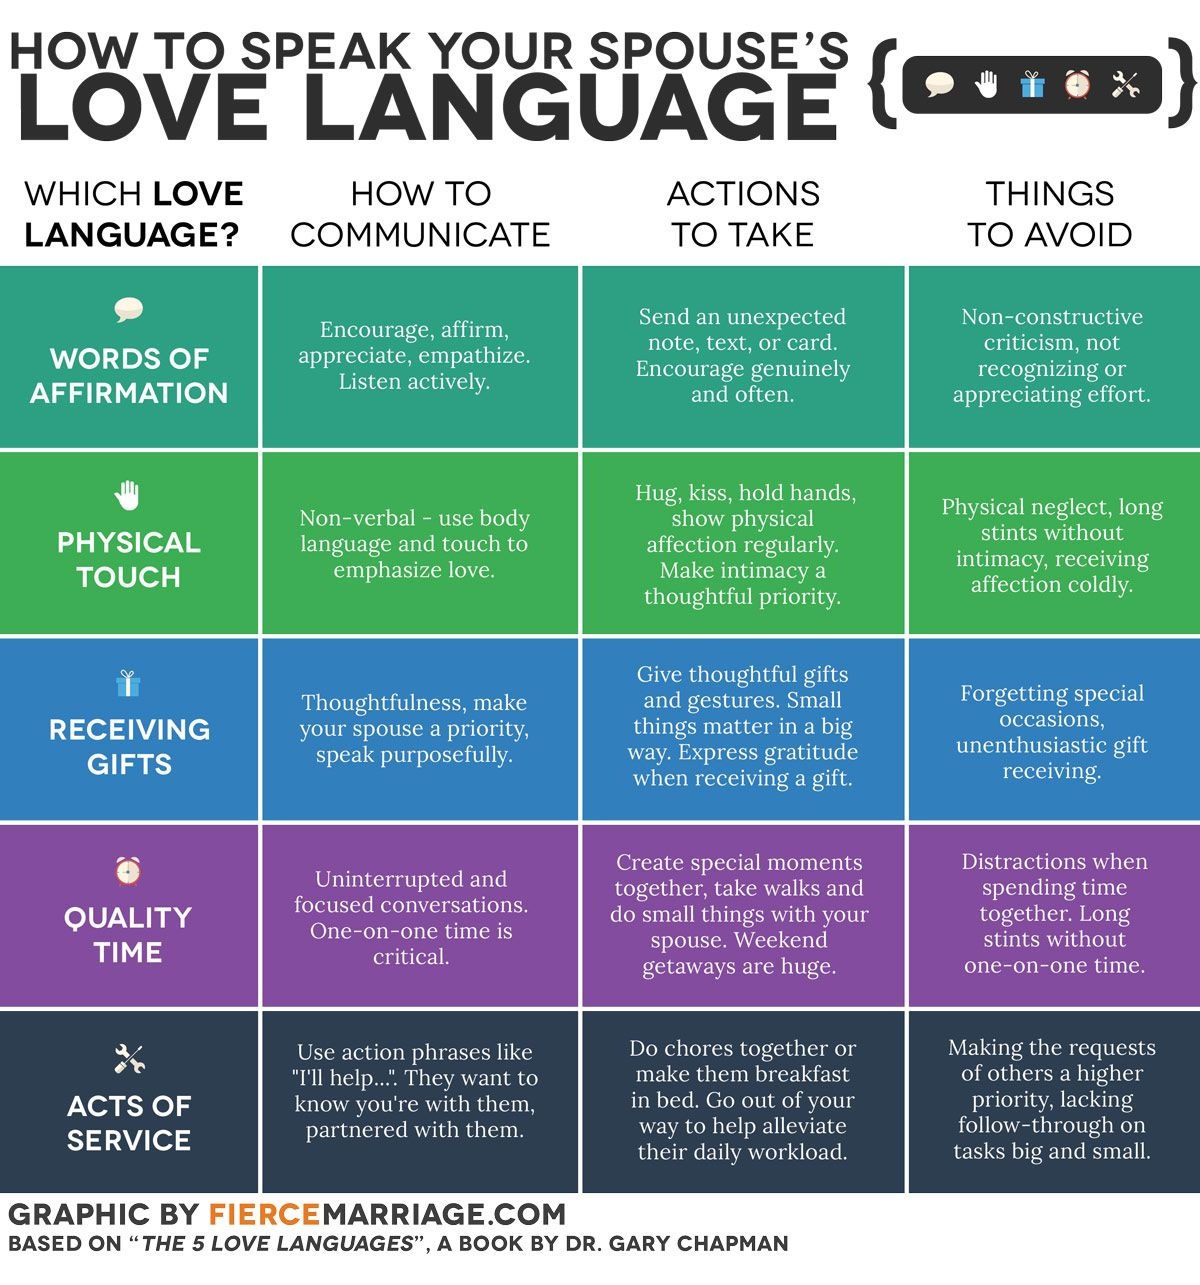 Five Love Languages Test Printable